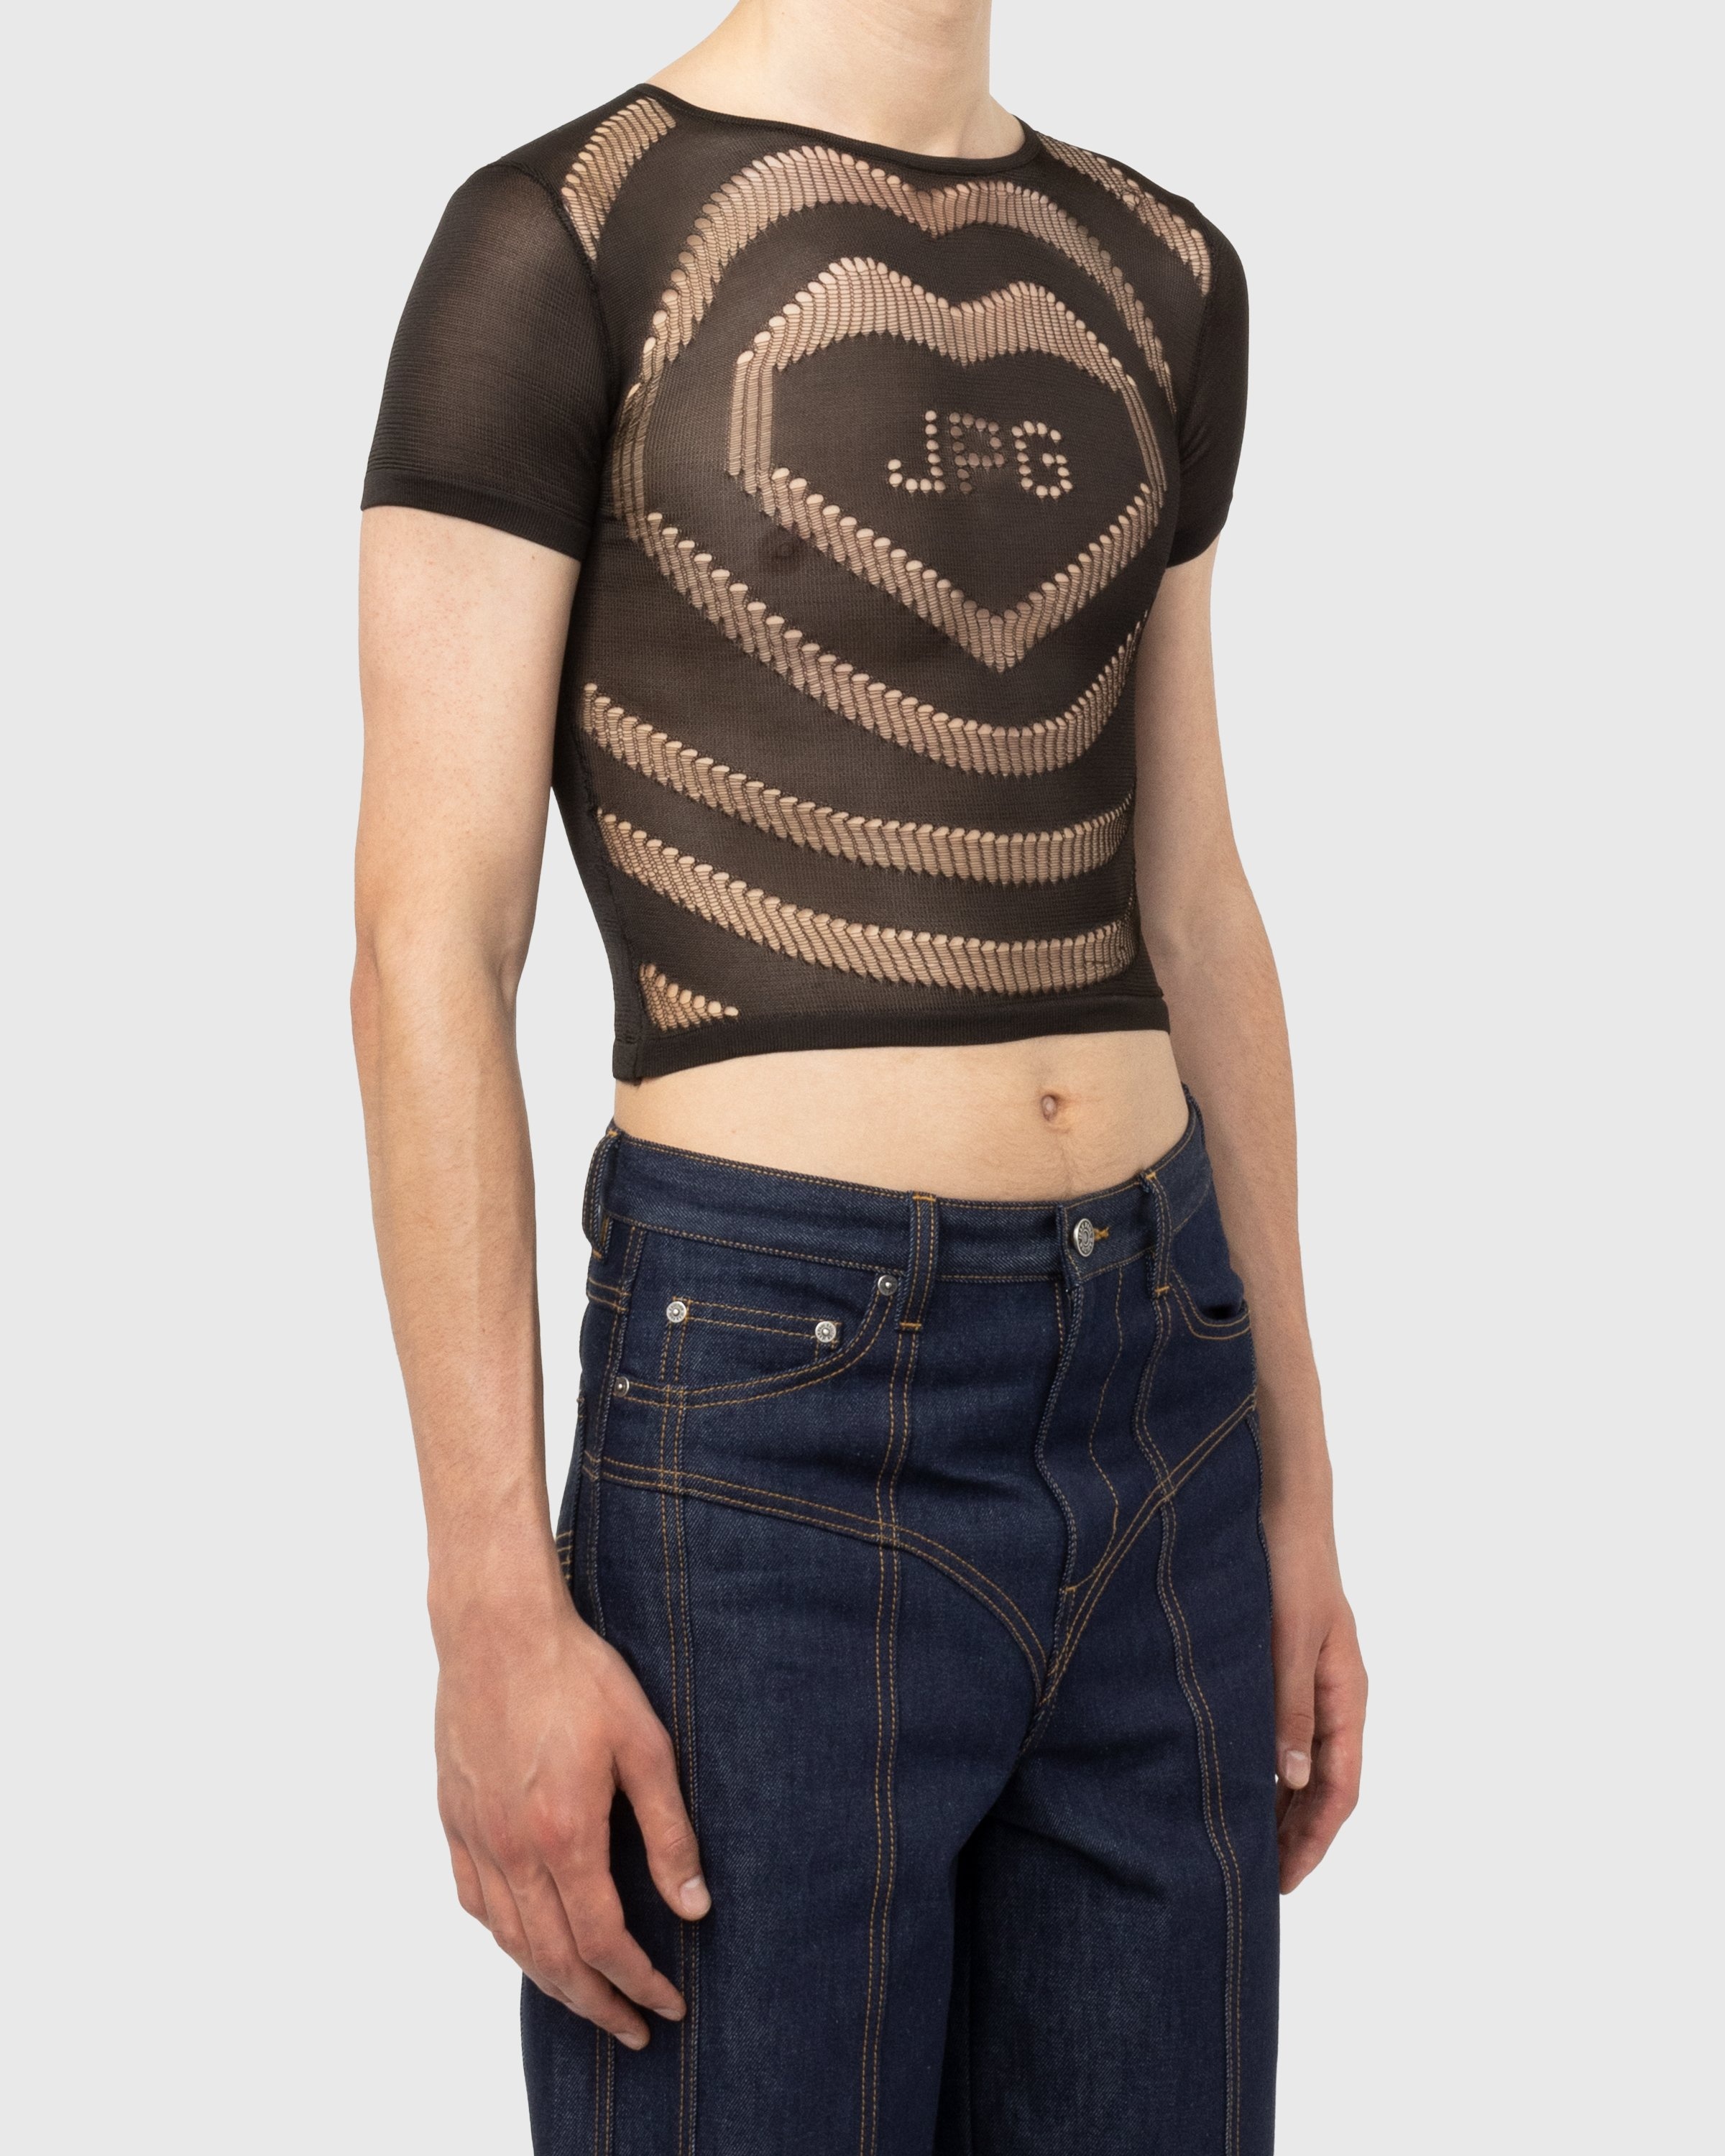 Jean Paul Gaultier – Open-Worked JPG Heart T-Shirt Dark Brown - T-shirts - Brown - Image 5